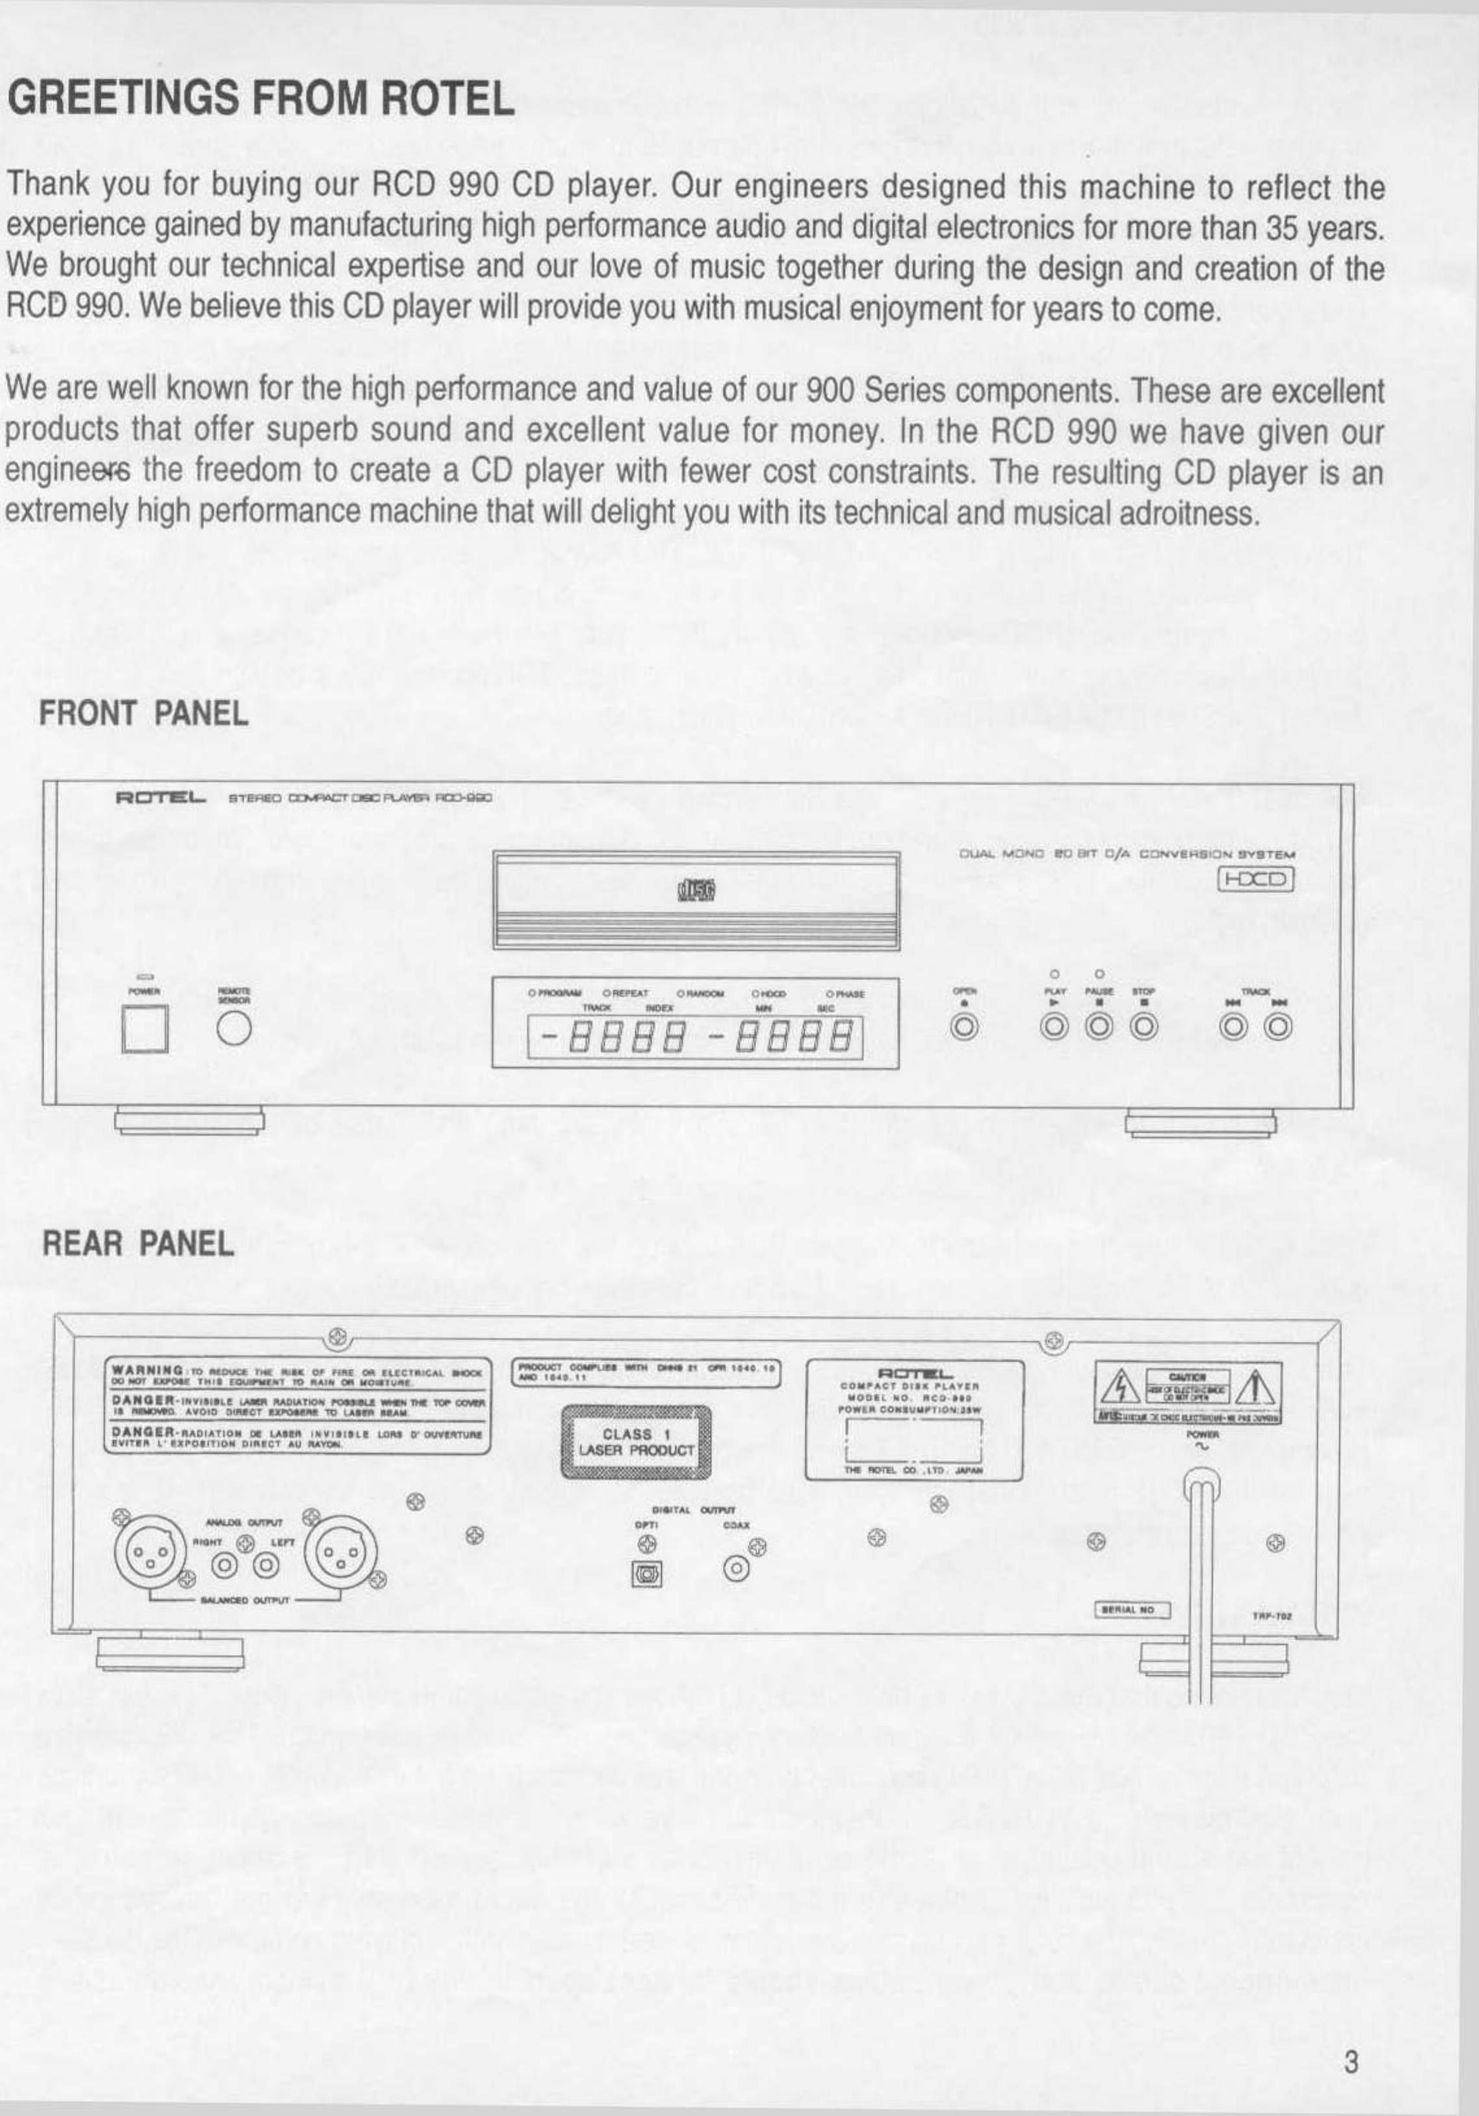 Rotel RCD 990 CD Player User Manual